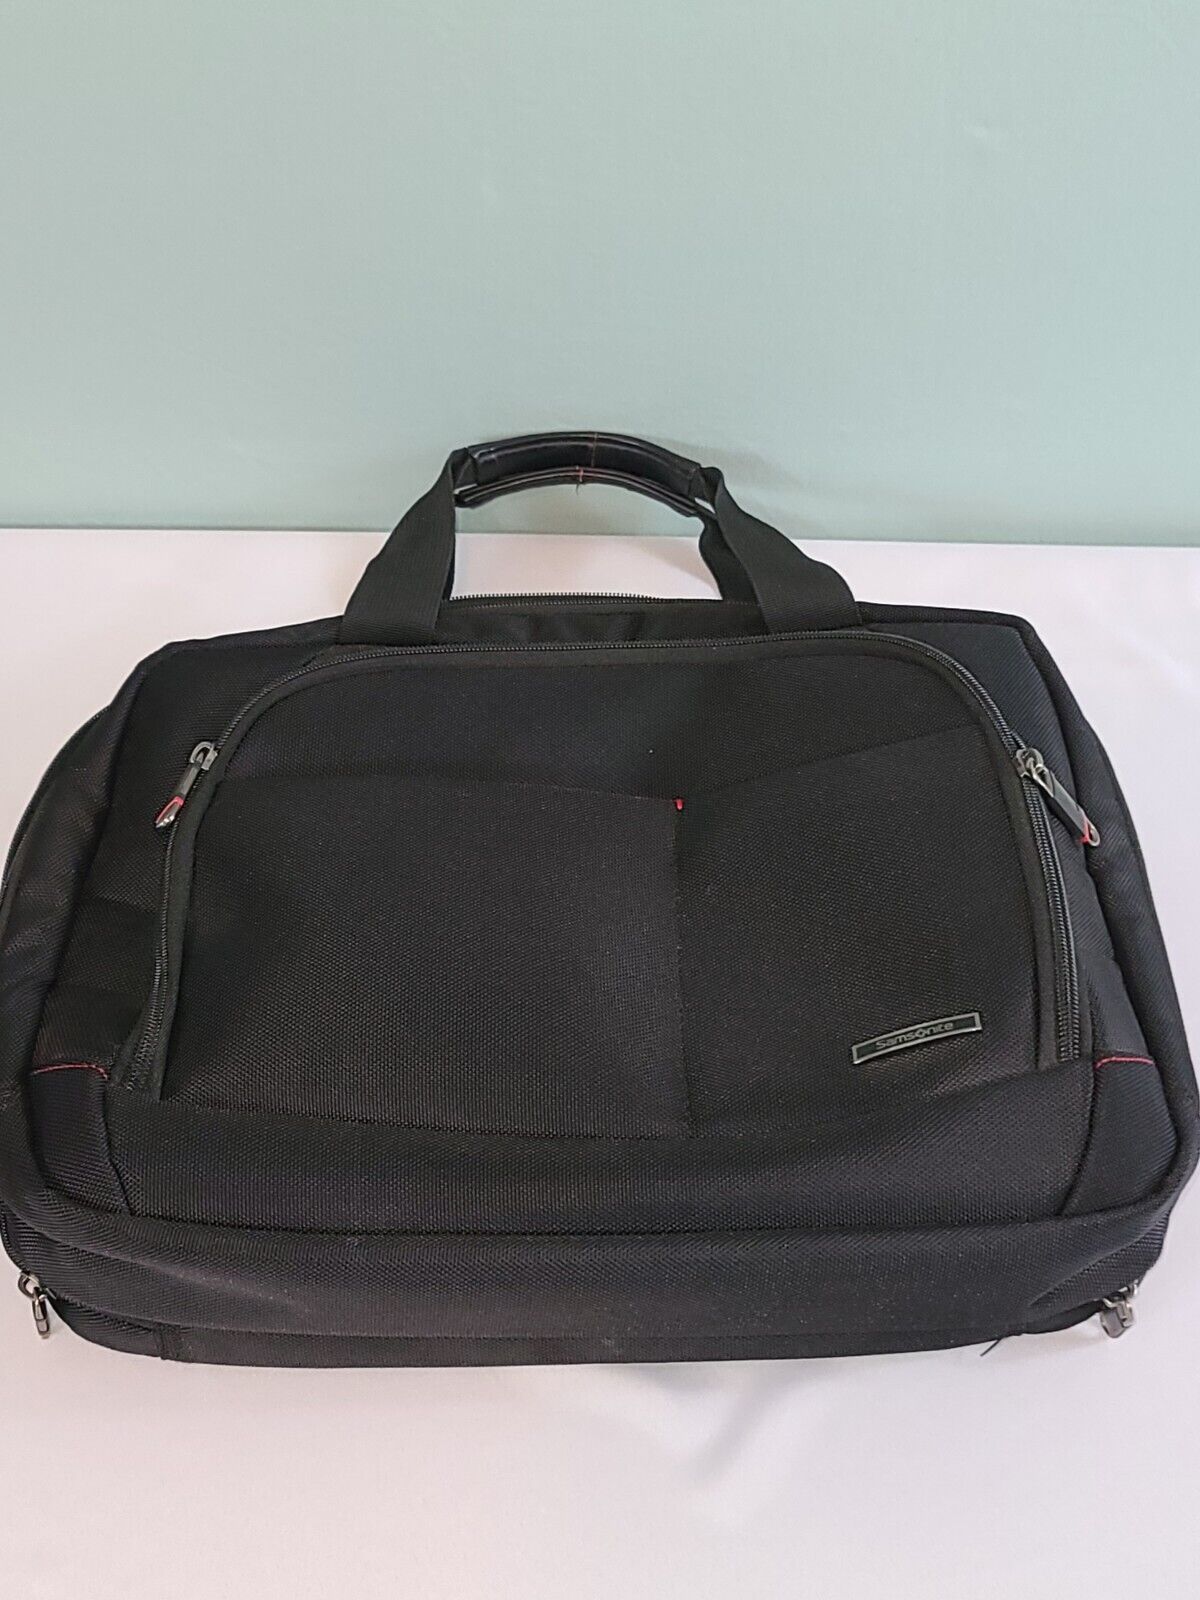 Samsonite Xenon 2 Laptop Portfolio Bag Carrying Case, Black Polyester 